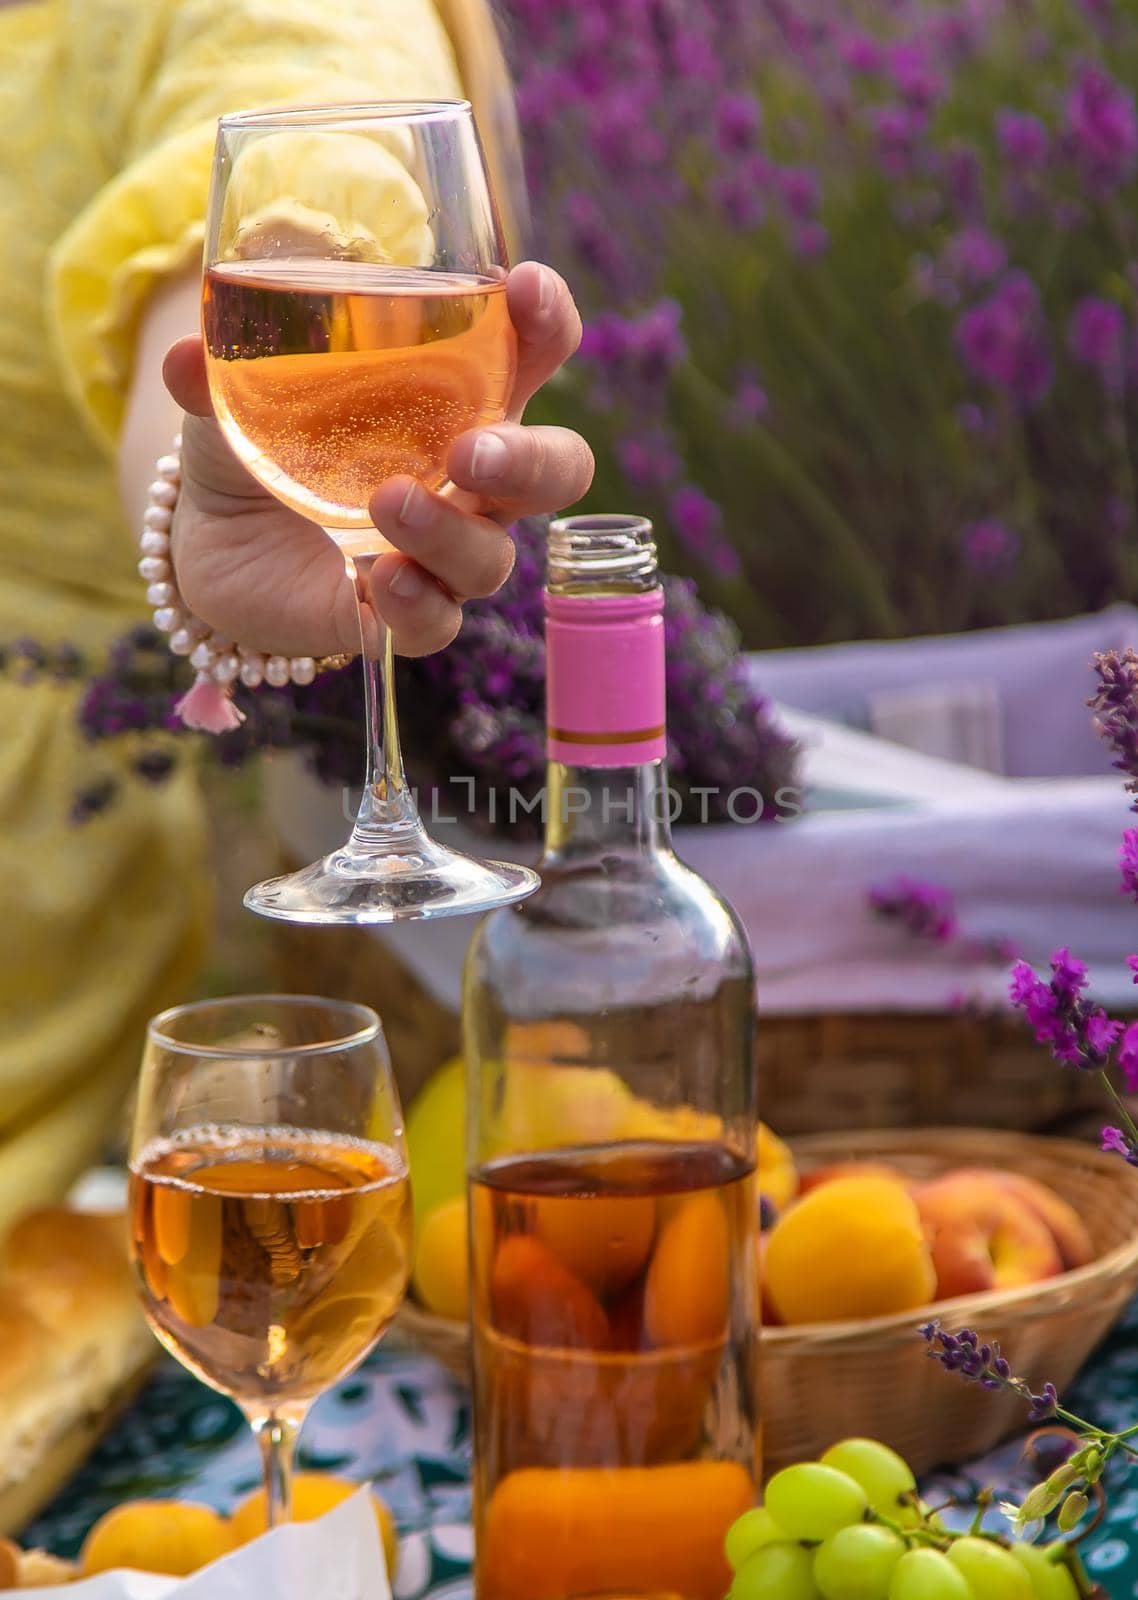 A woman drinks wine in a lavender field. Selective focus. by yanadjana